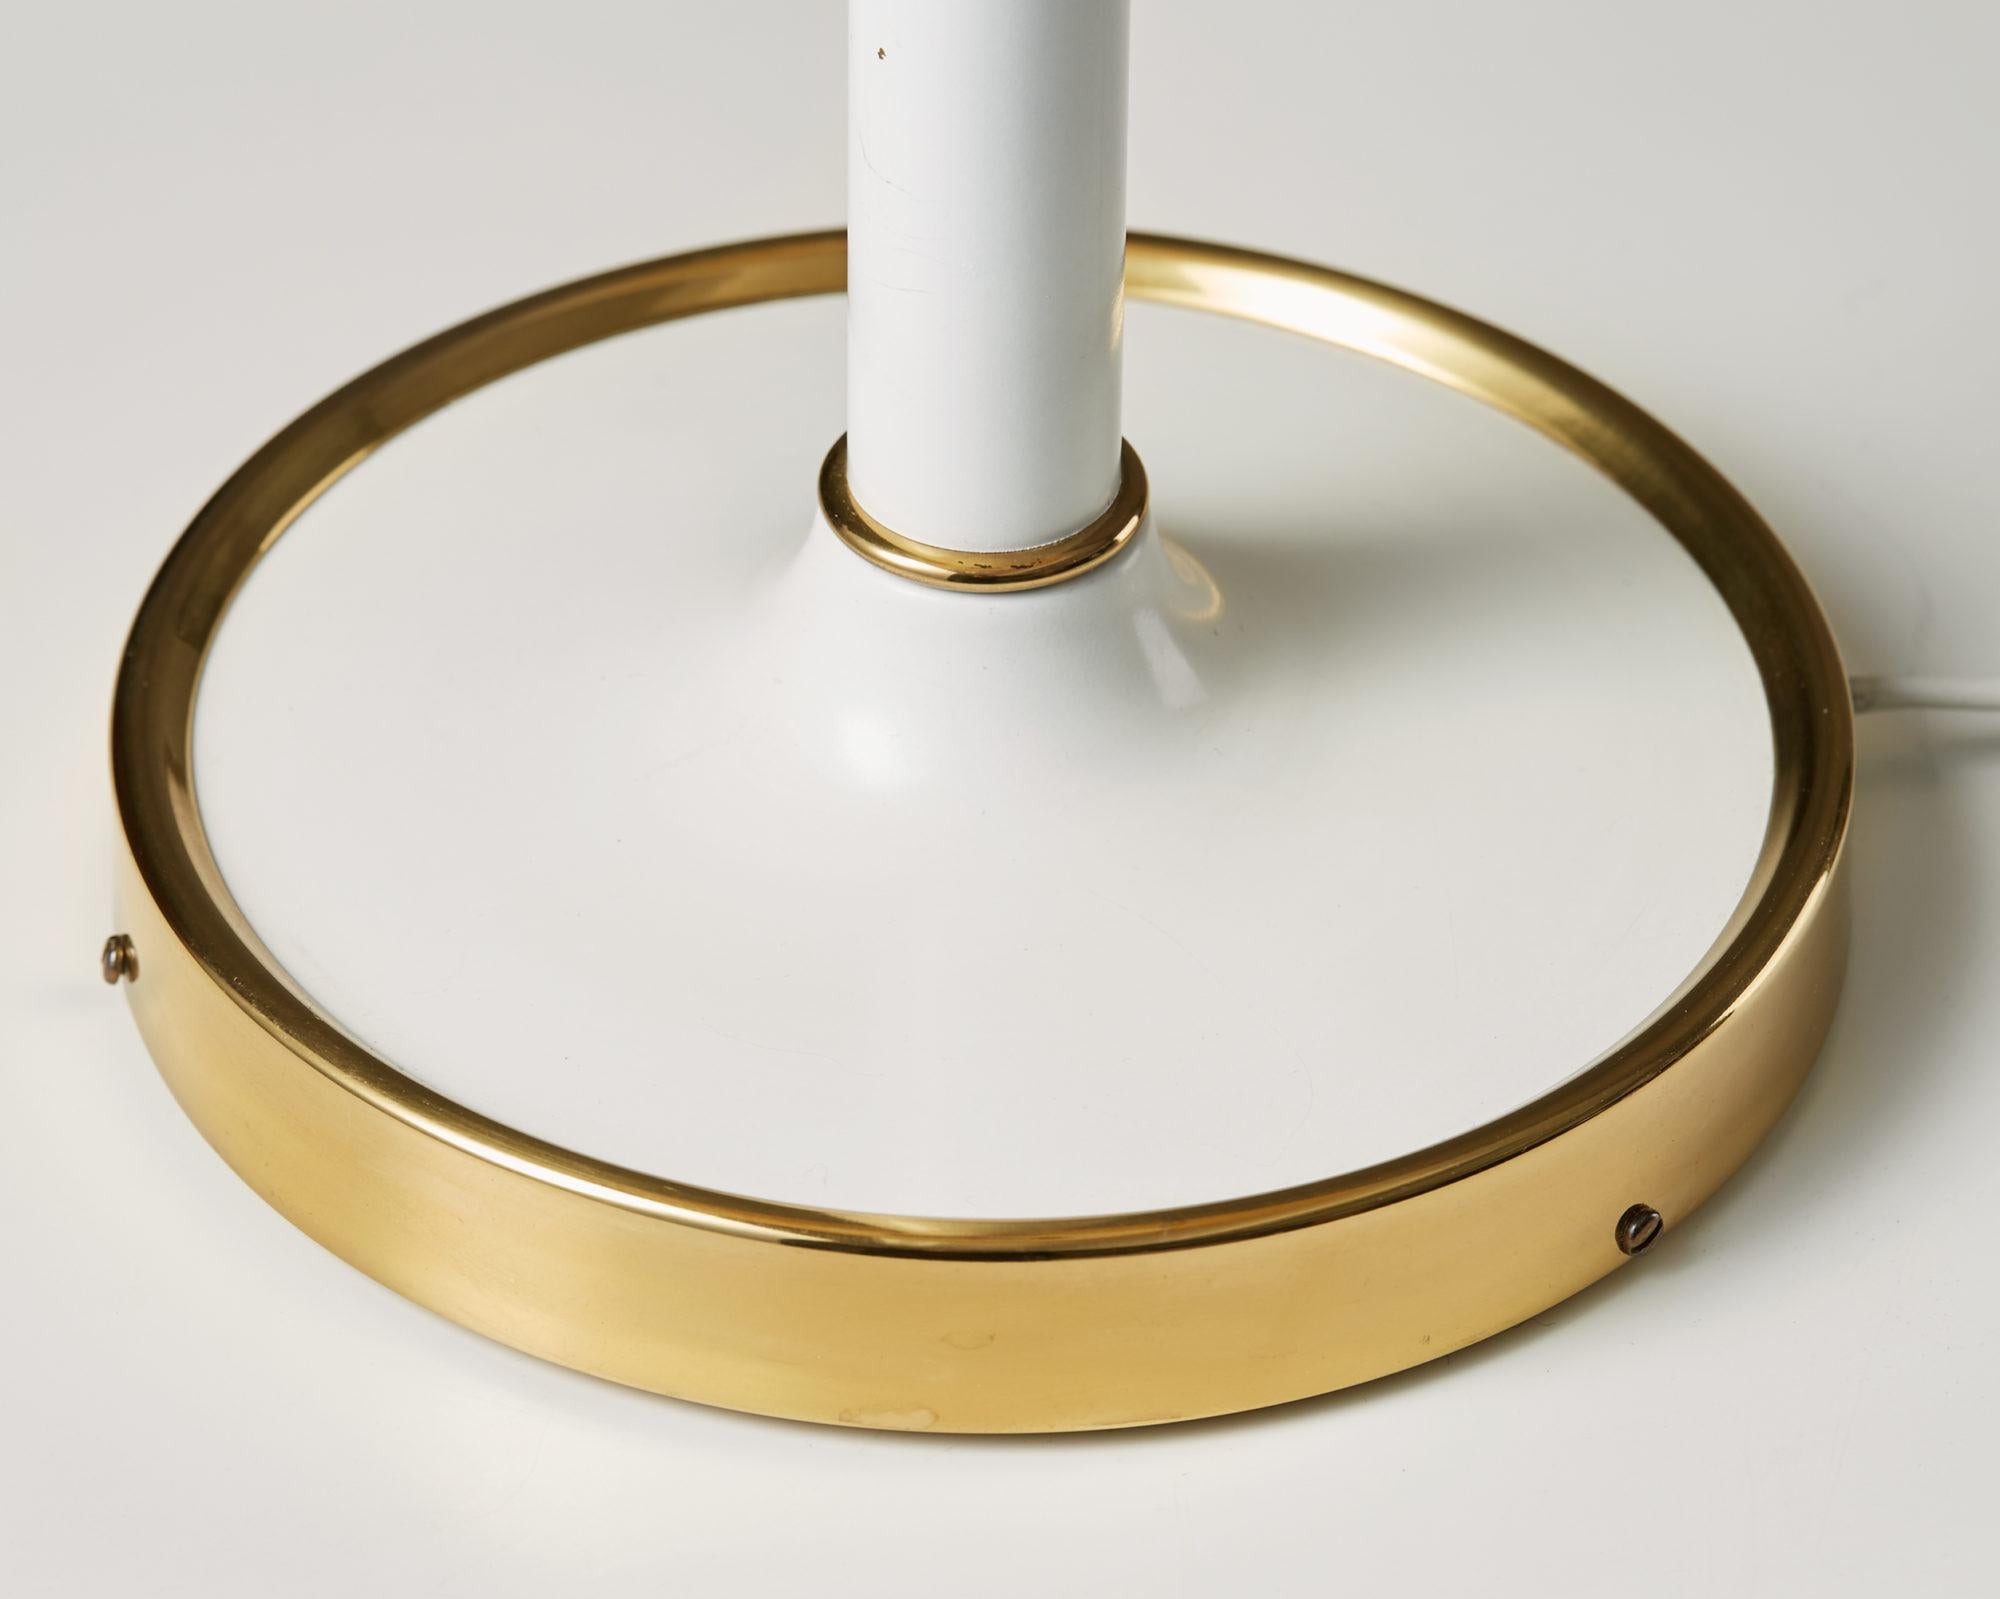 Scandinavian Modern Table Lamp Model Number 2466 Designed by Josef Frank for Svenskt Tenn, Sweden. 1